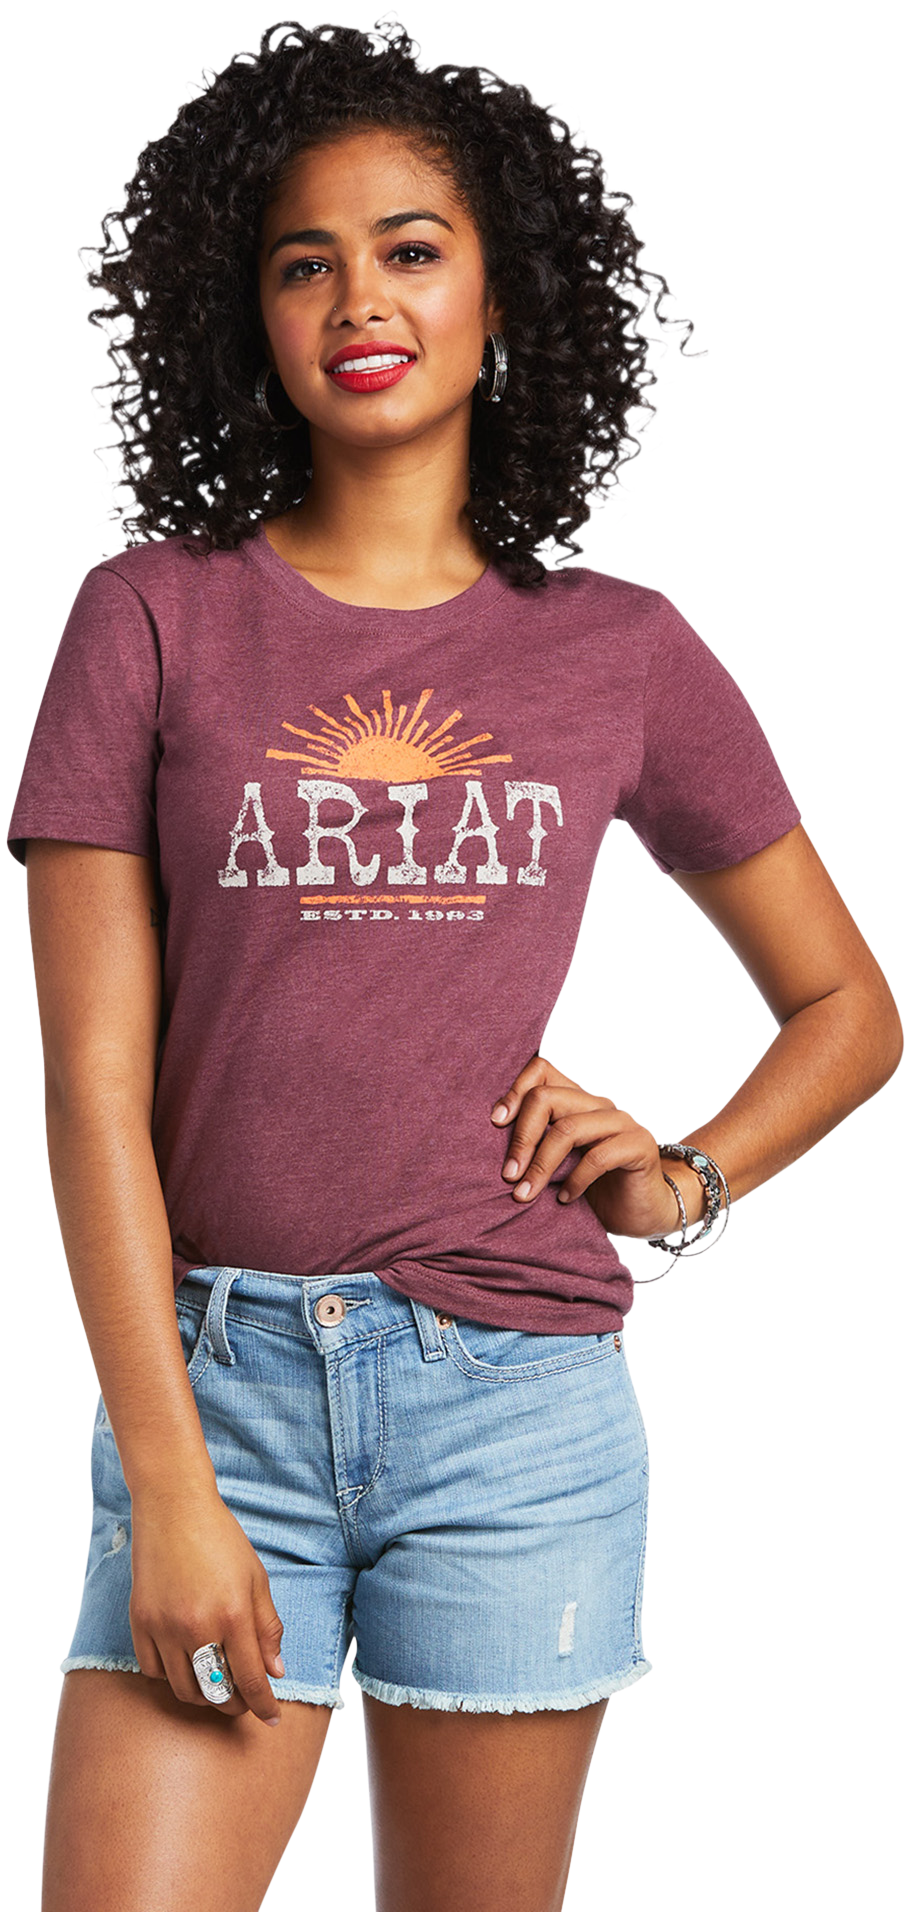 Ariat Amarillo Short-Sleeve T-Shirt for Ladies - Burgundy Heather - M